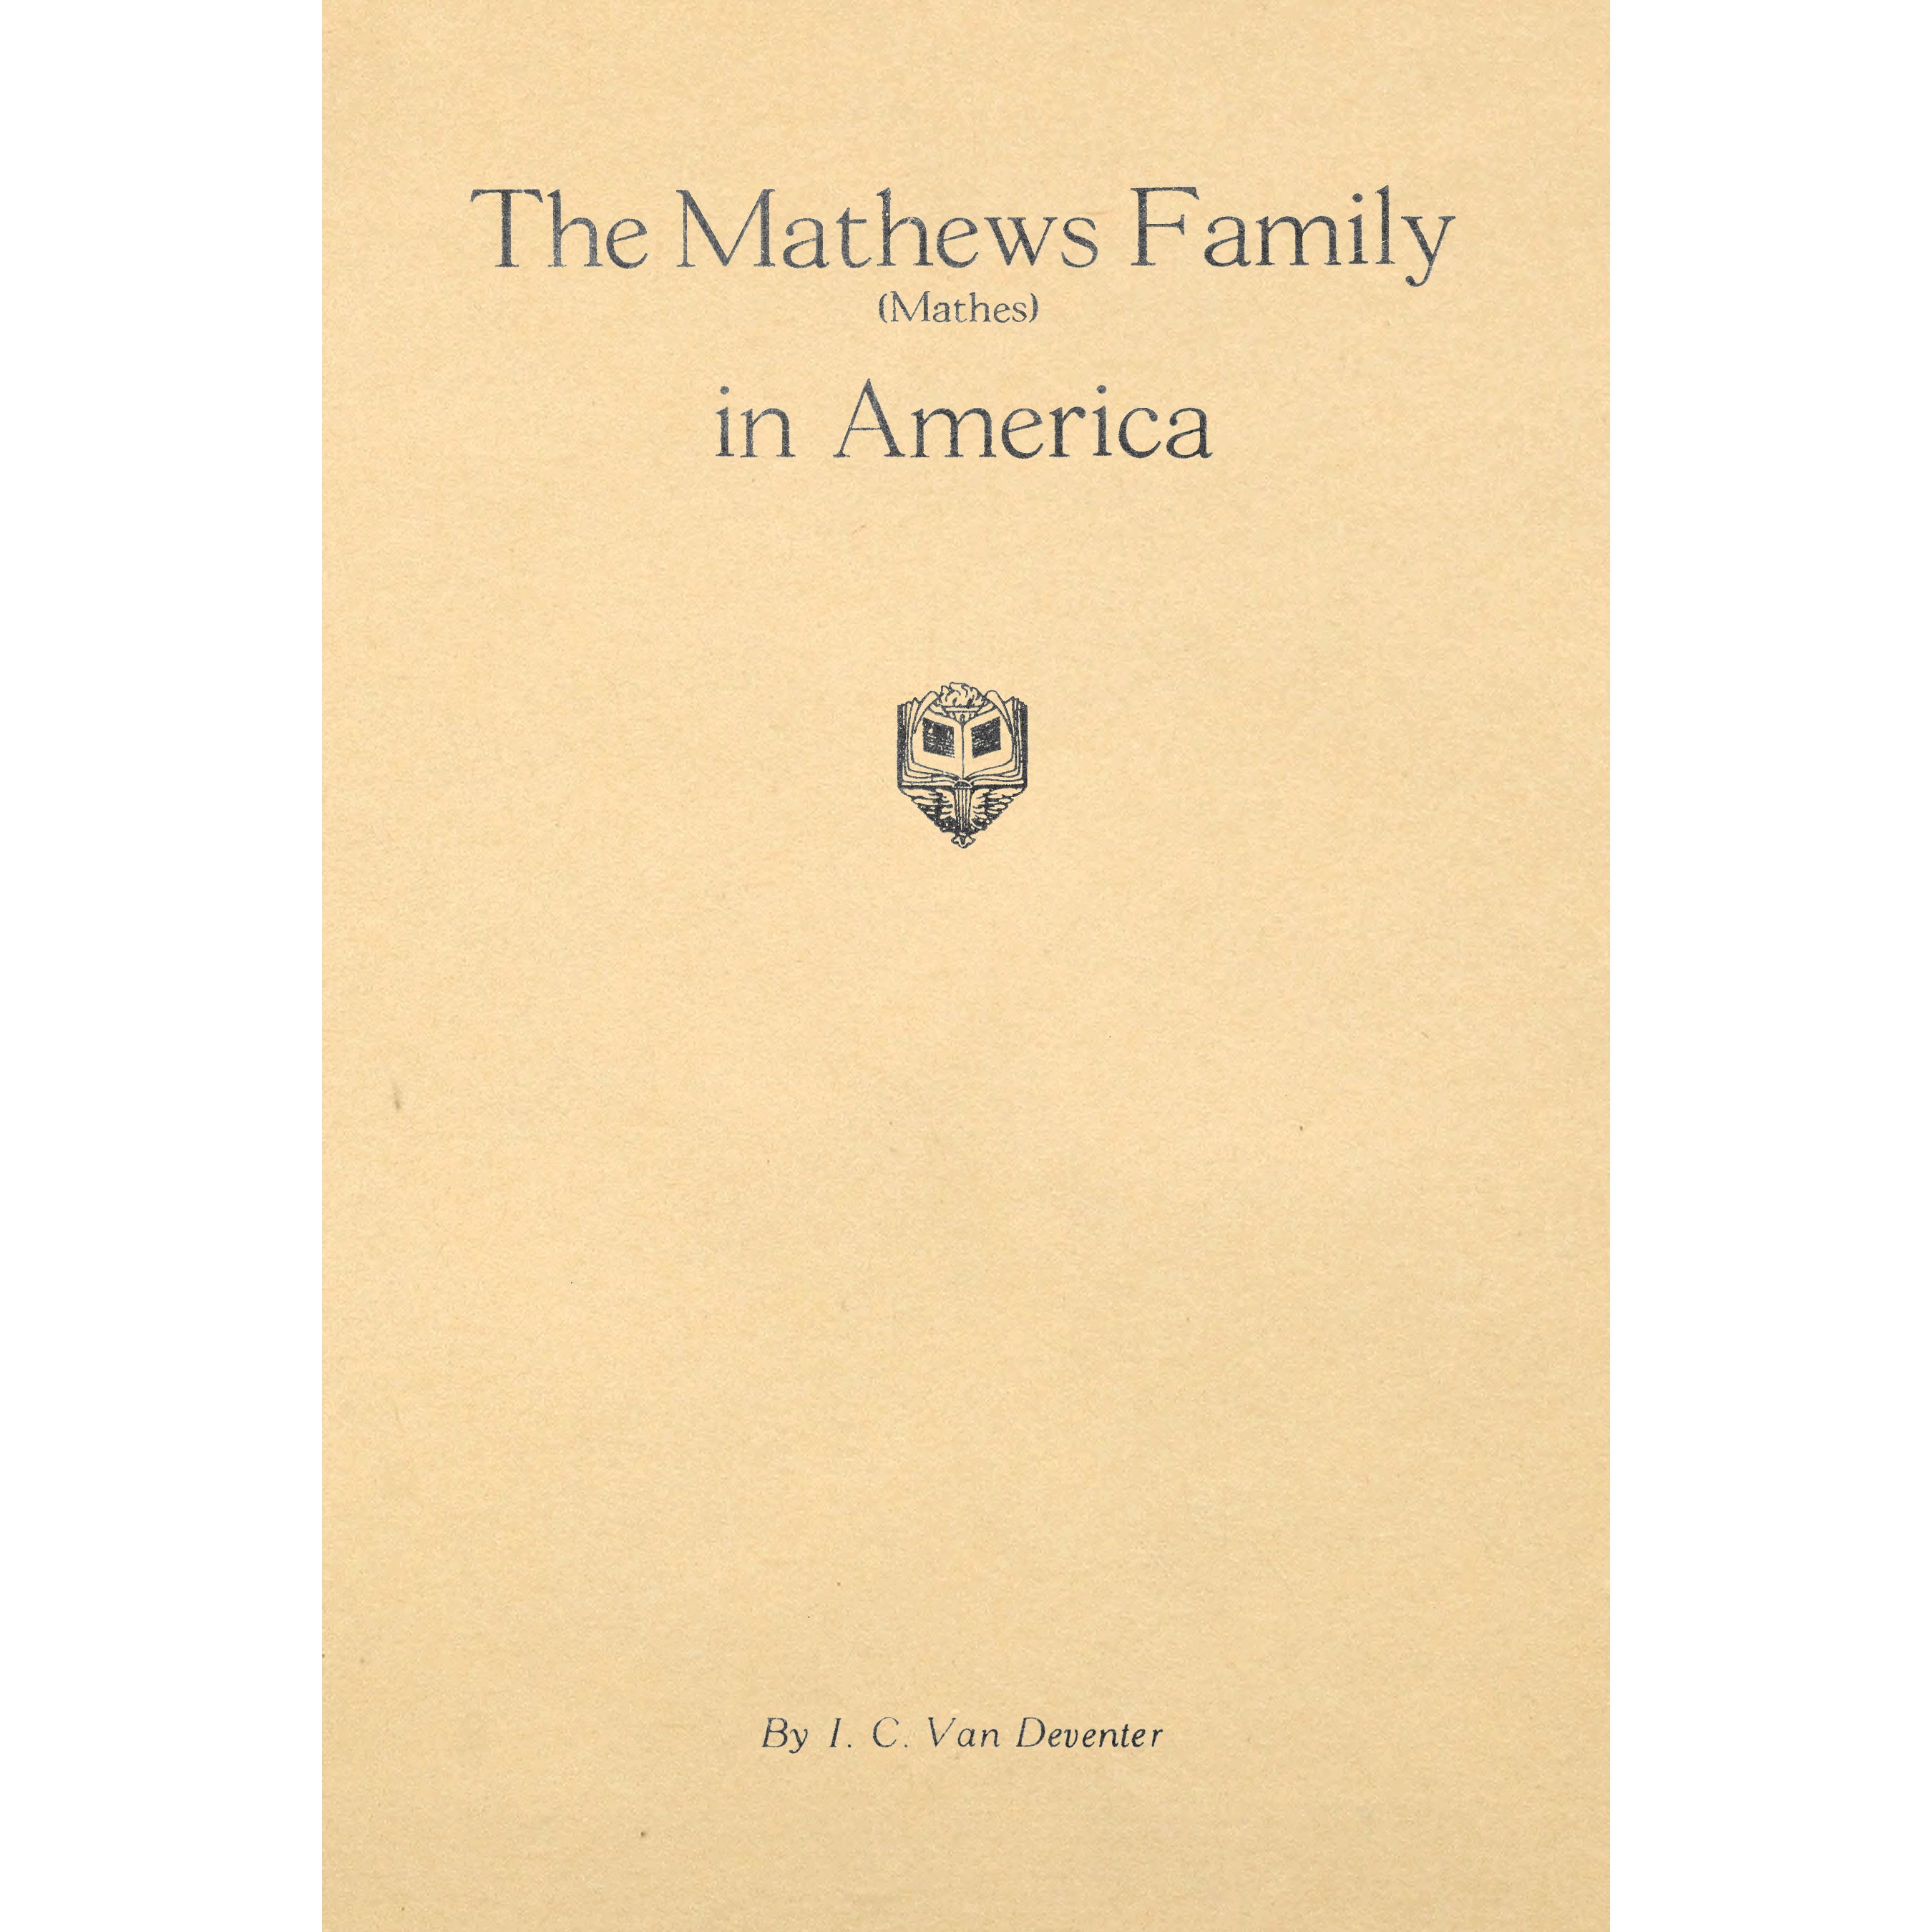 The Mathews Family in America